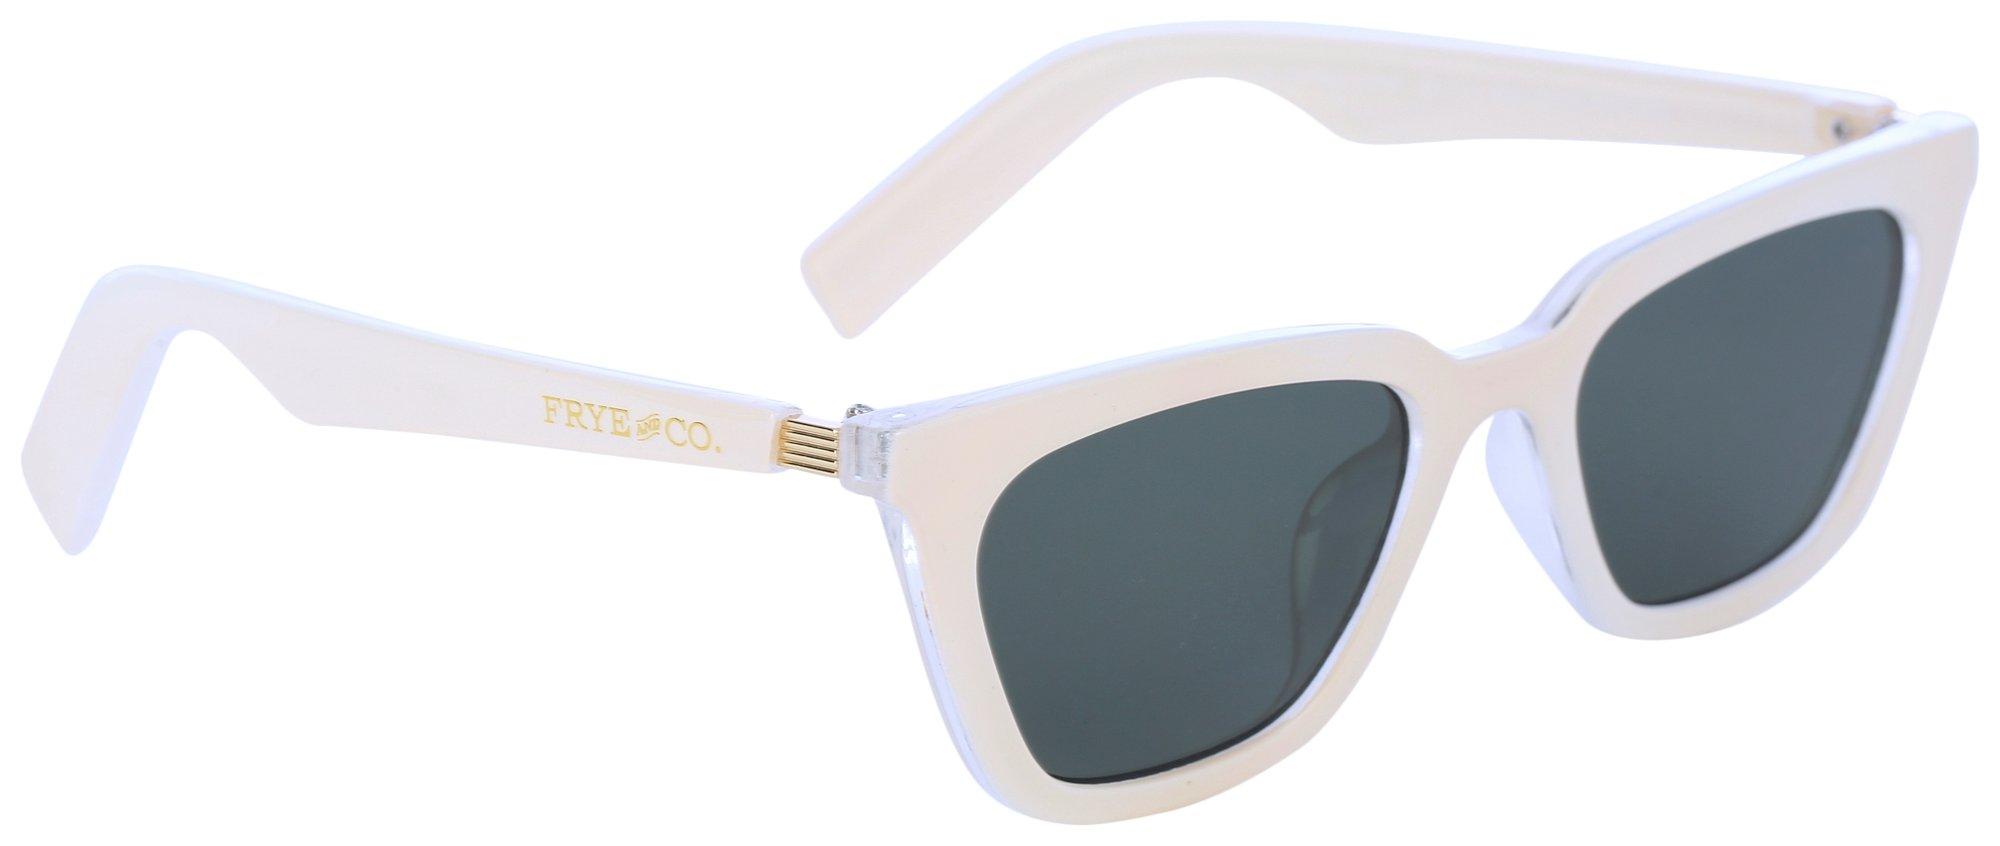 Frye & Co Womens Cateye Solid Sunglasses